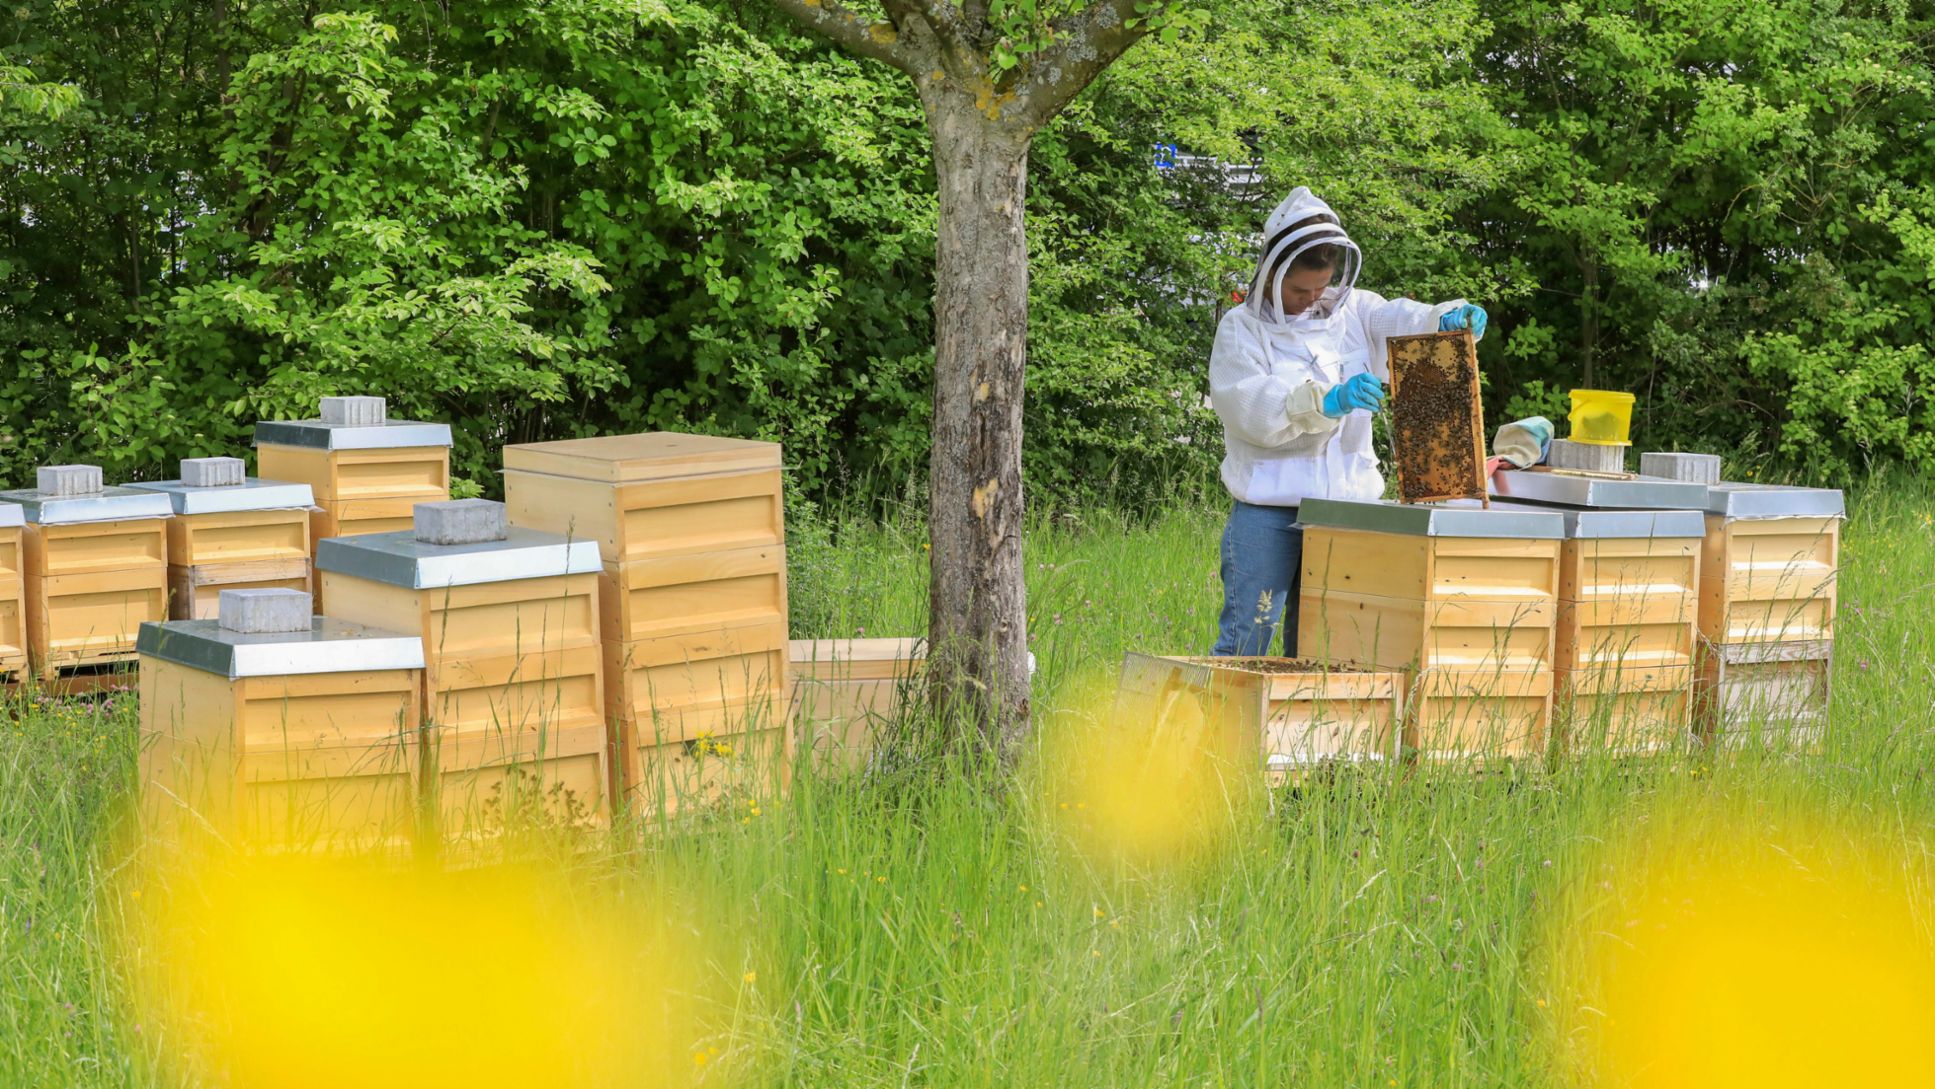 Honigbienen in Zuffenhausen, 2020, Porsche AG